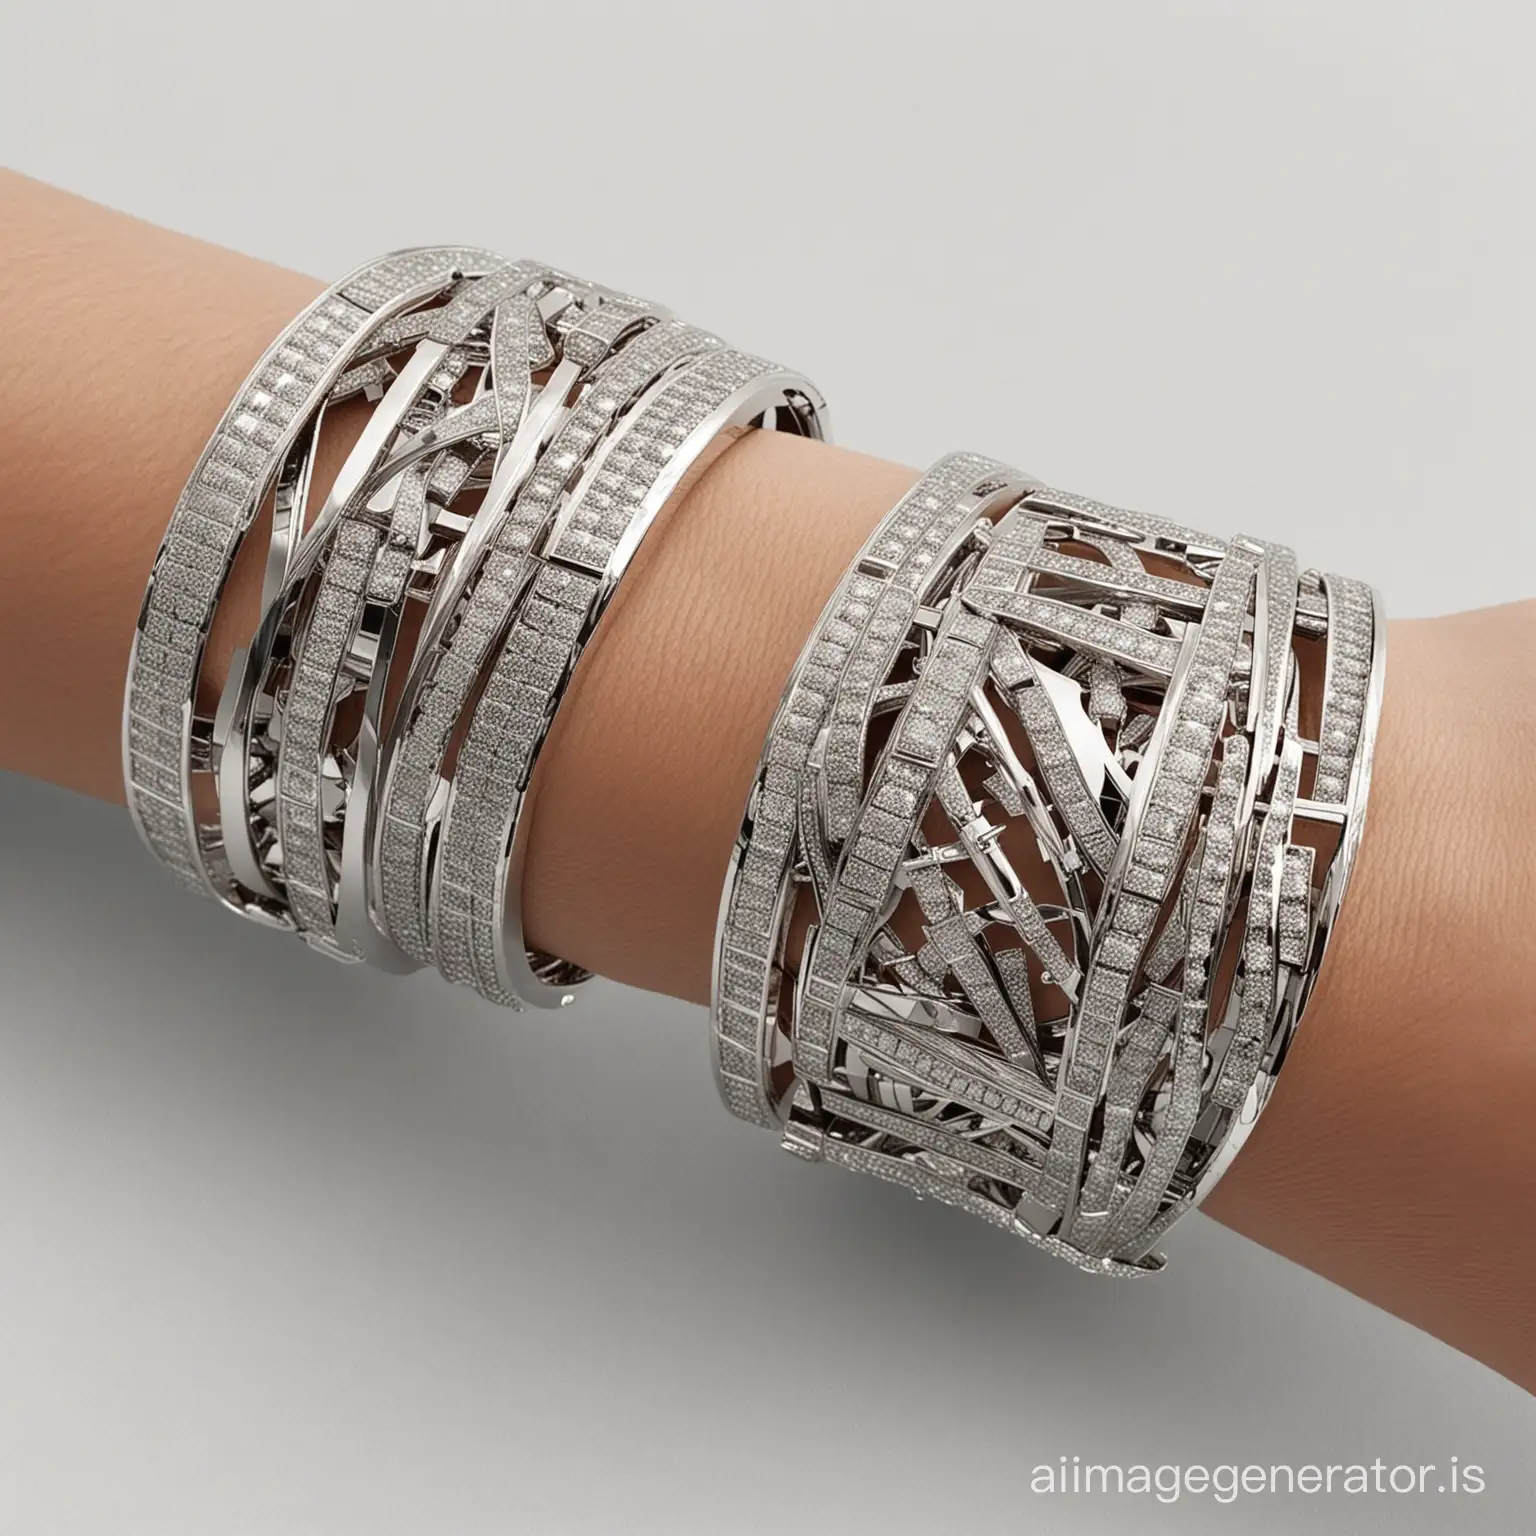 futuristic architectural bracelets of white gold with diamonds